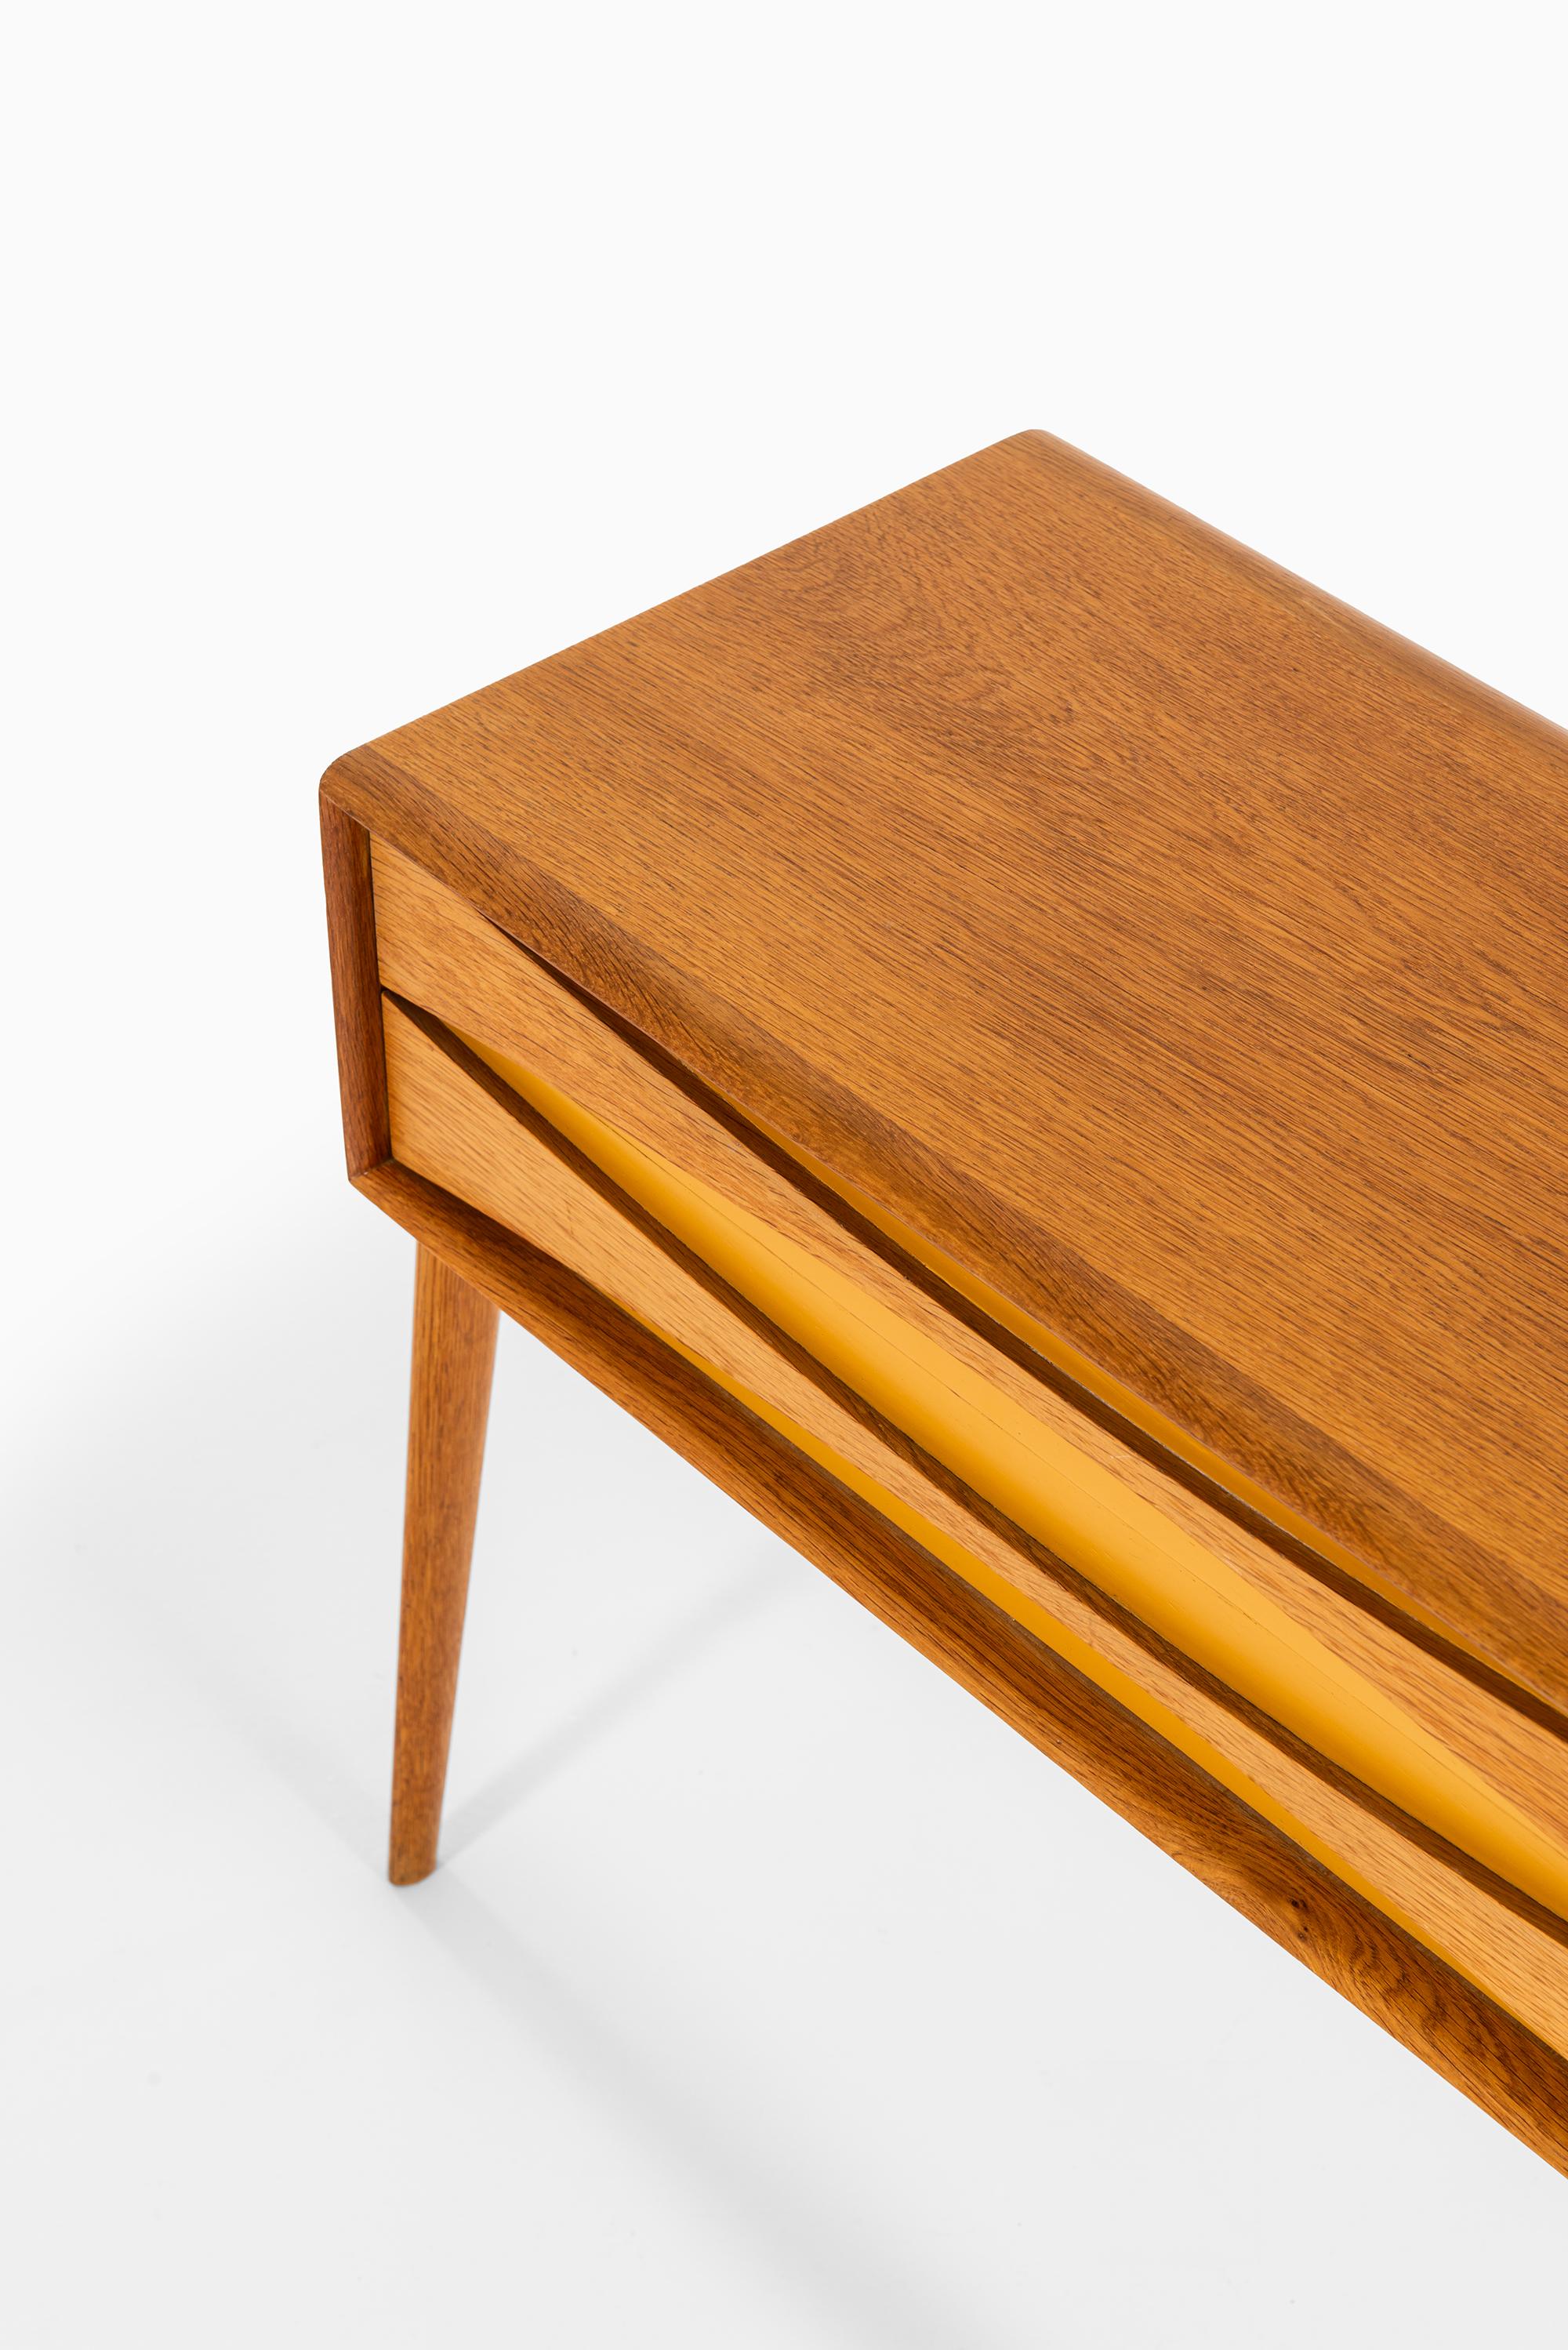 Oak Rimbert Sandholt Side Table / Bureau Produced by Glas & Trä Hovmantorp in Sweden For Sale